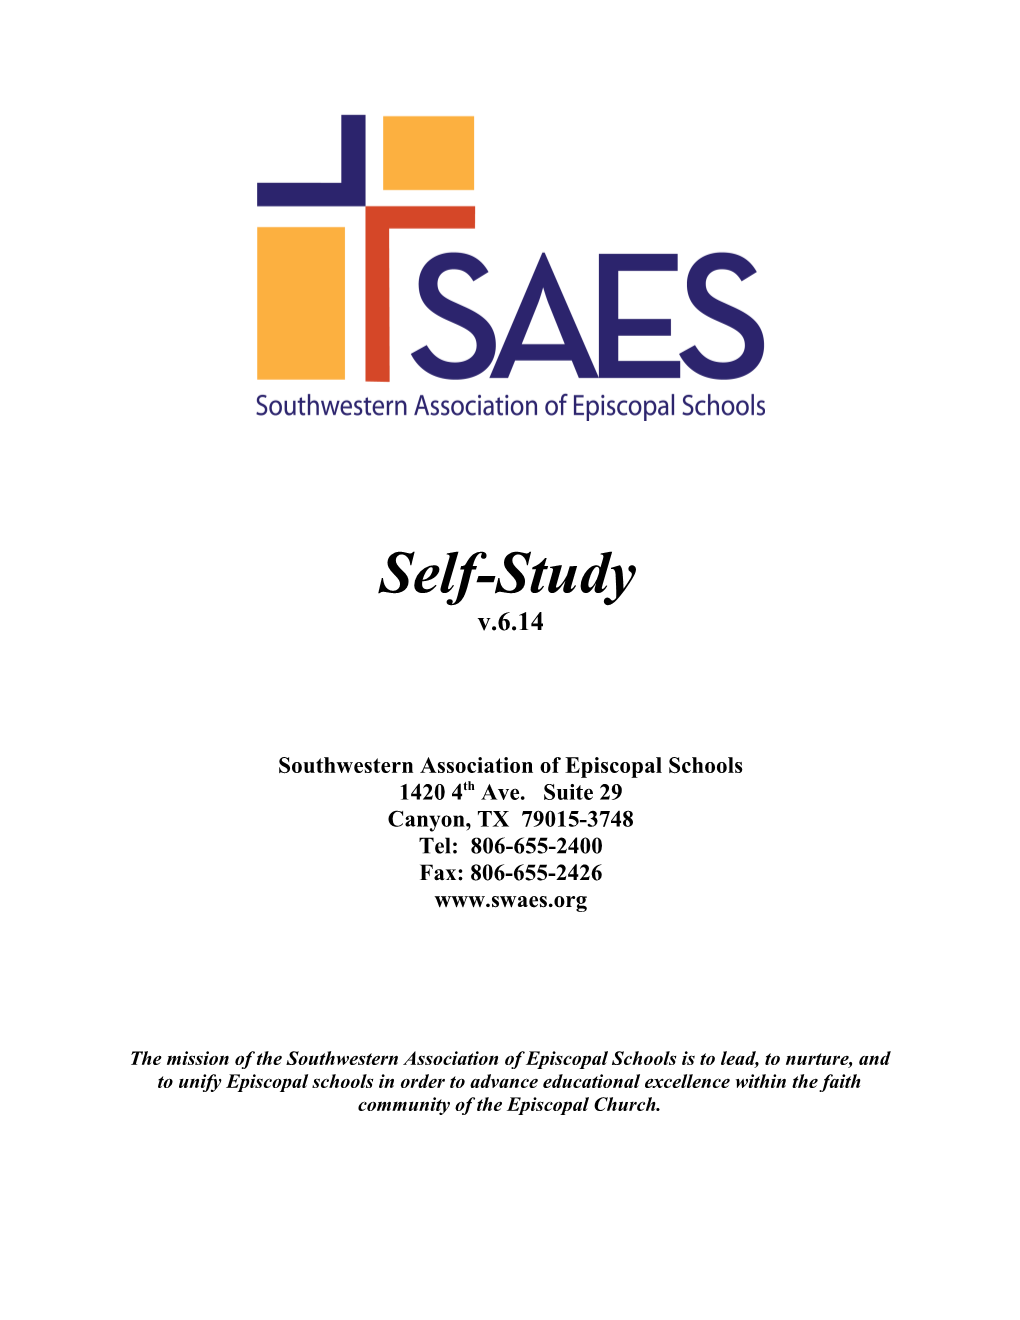 SAES SELF-STUDY V1.12